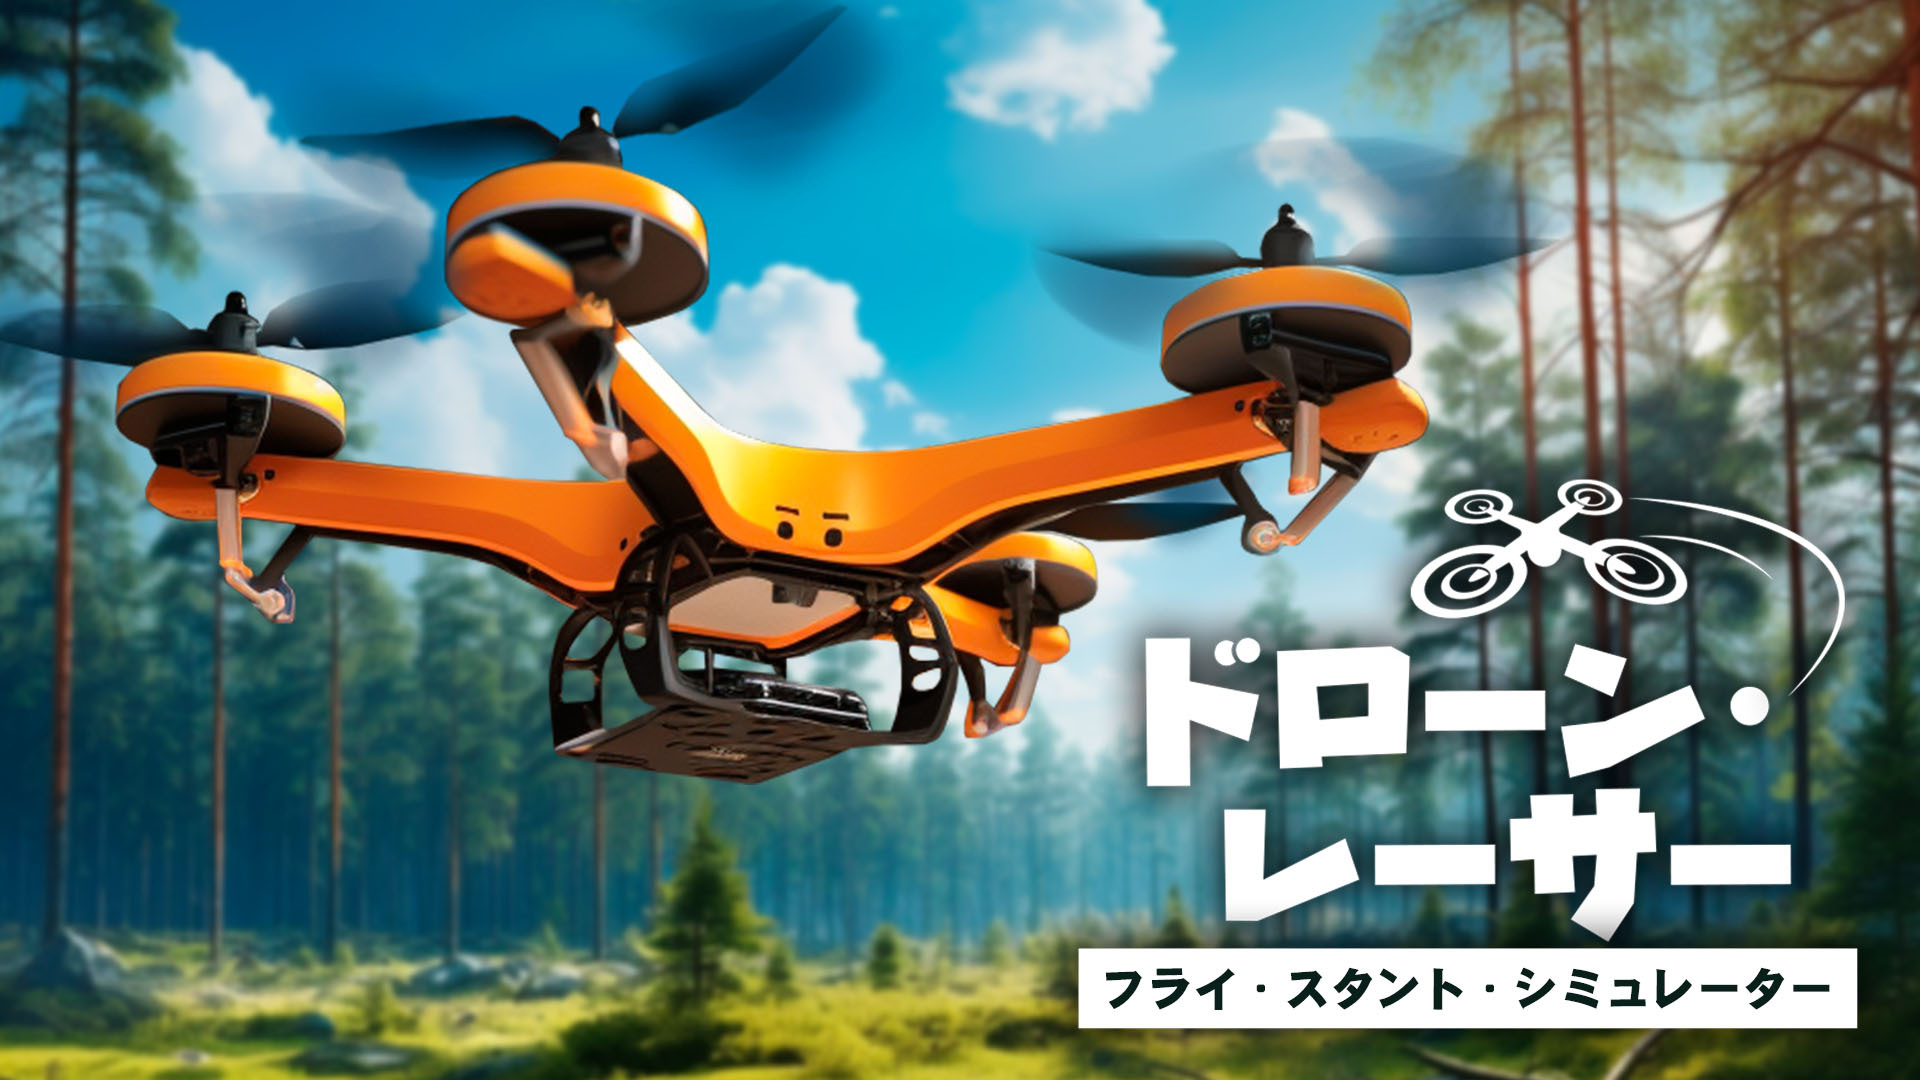 Drone Racer: Fly Stunt Simulator